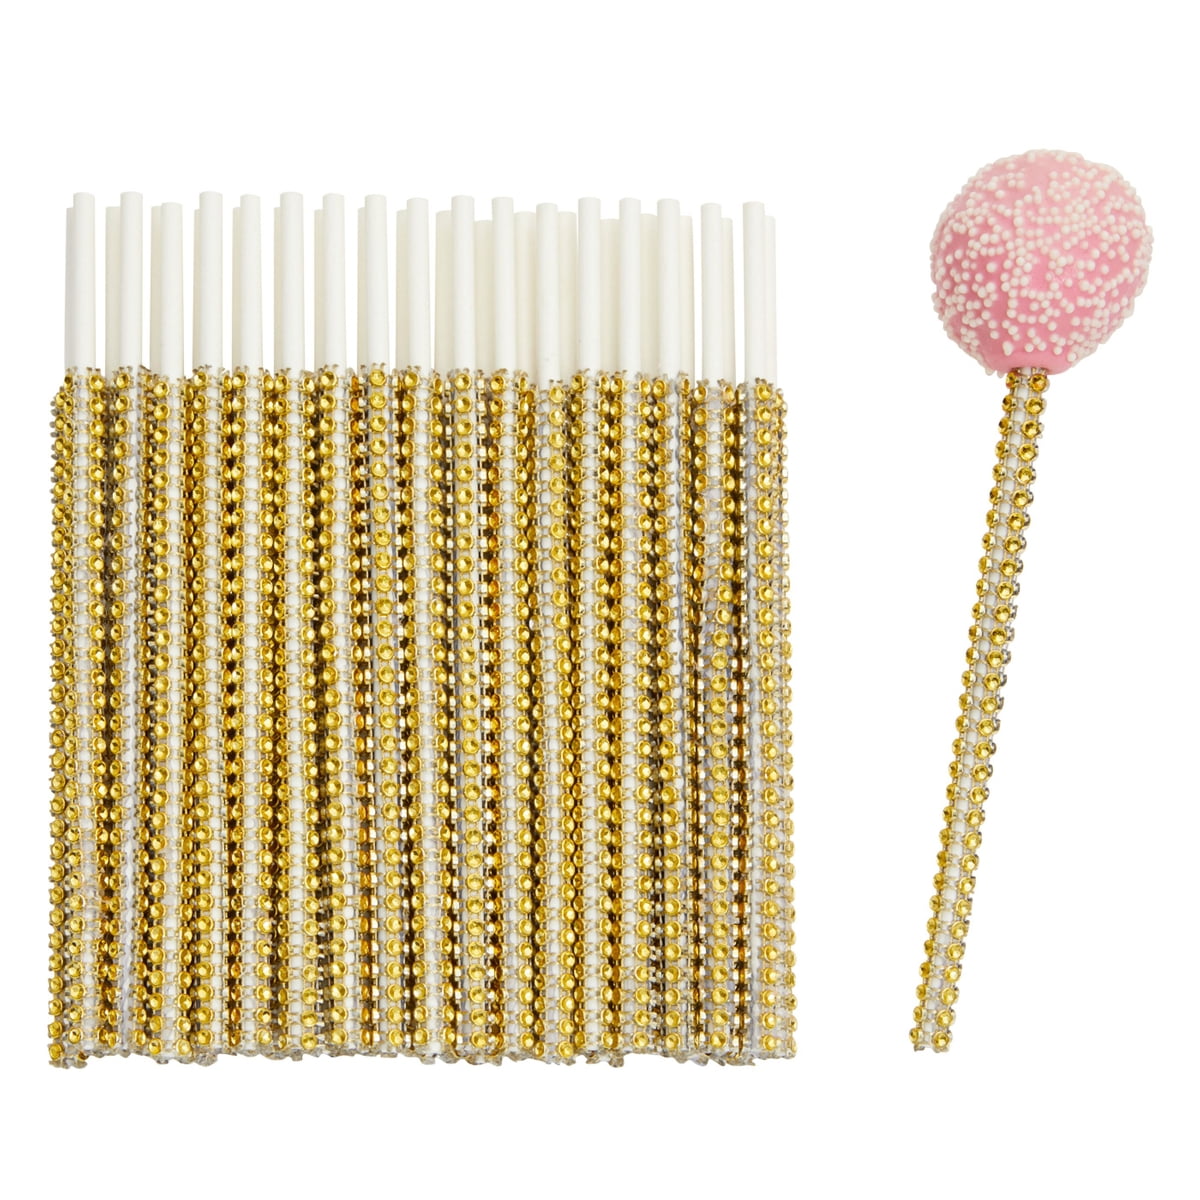 36 Pcs Candy Apple Bamboo Sticks, Bling Rhinestones Sticks For